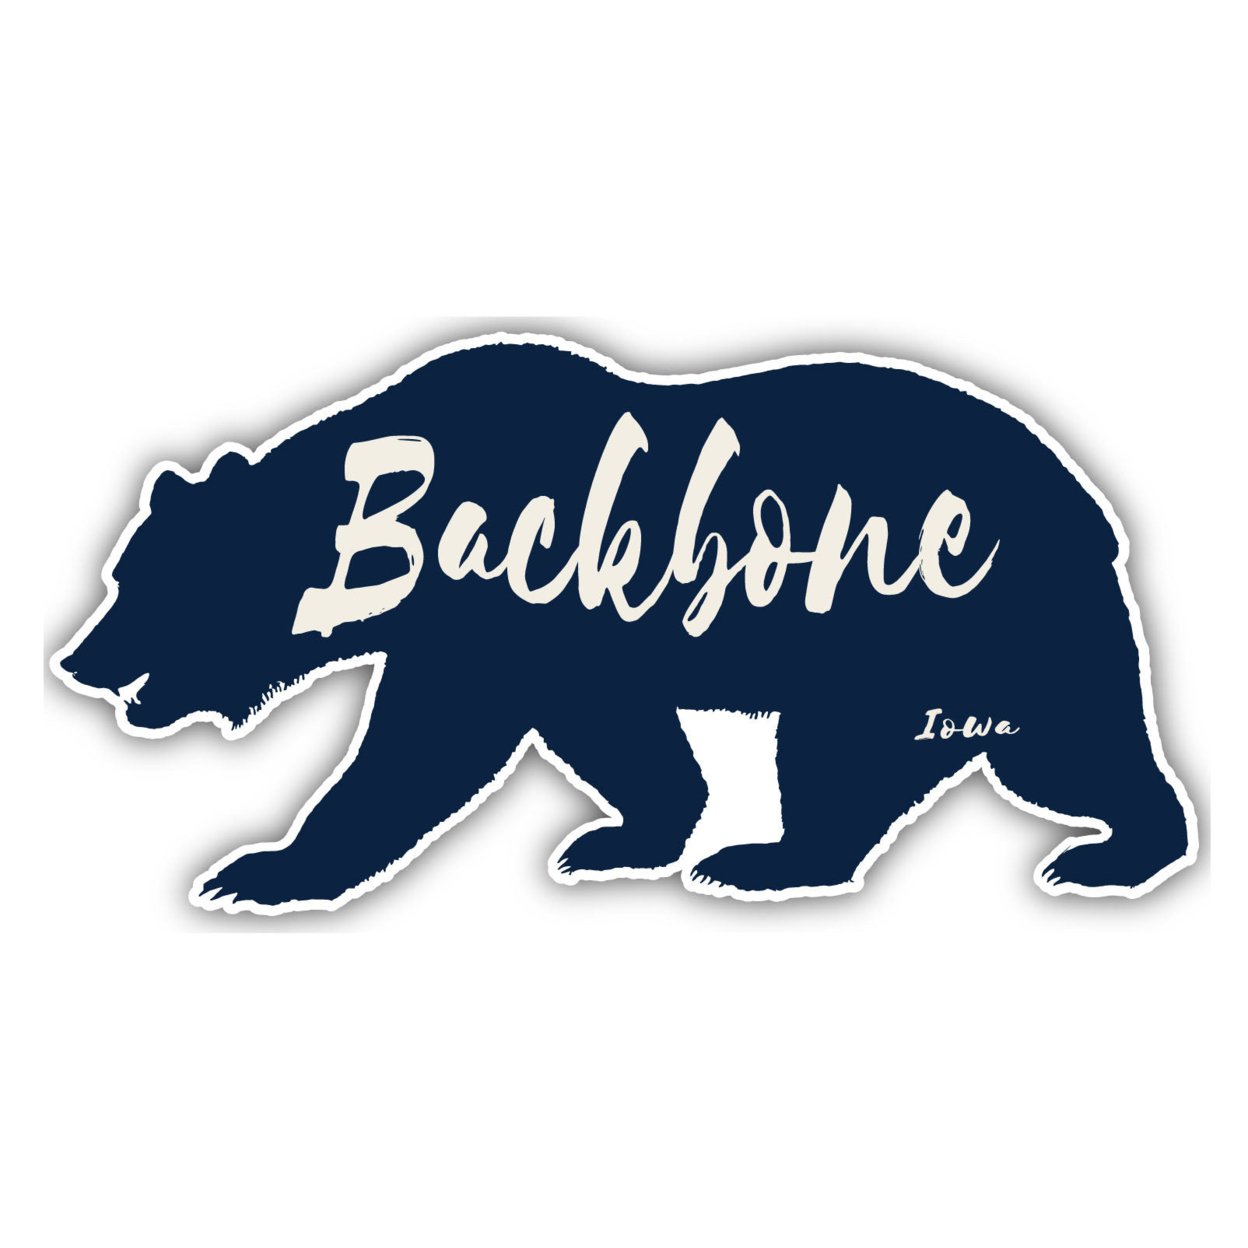 Backbone Iowa Souvenir Decorative Stickers (Choose Theme And Size) - 4-Pack, 10-Inch, Bear